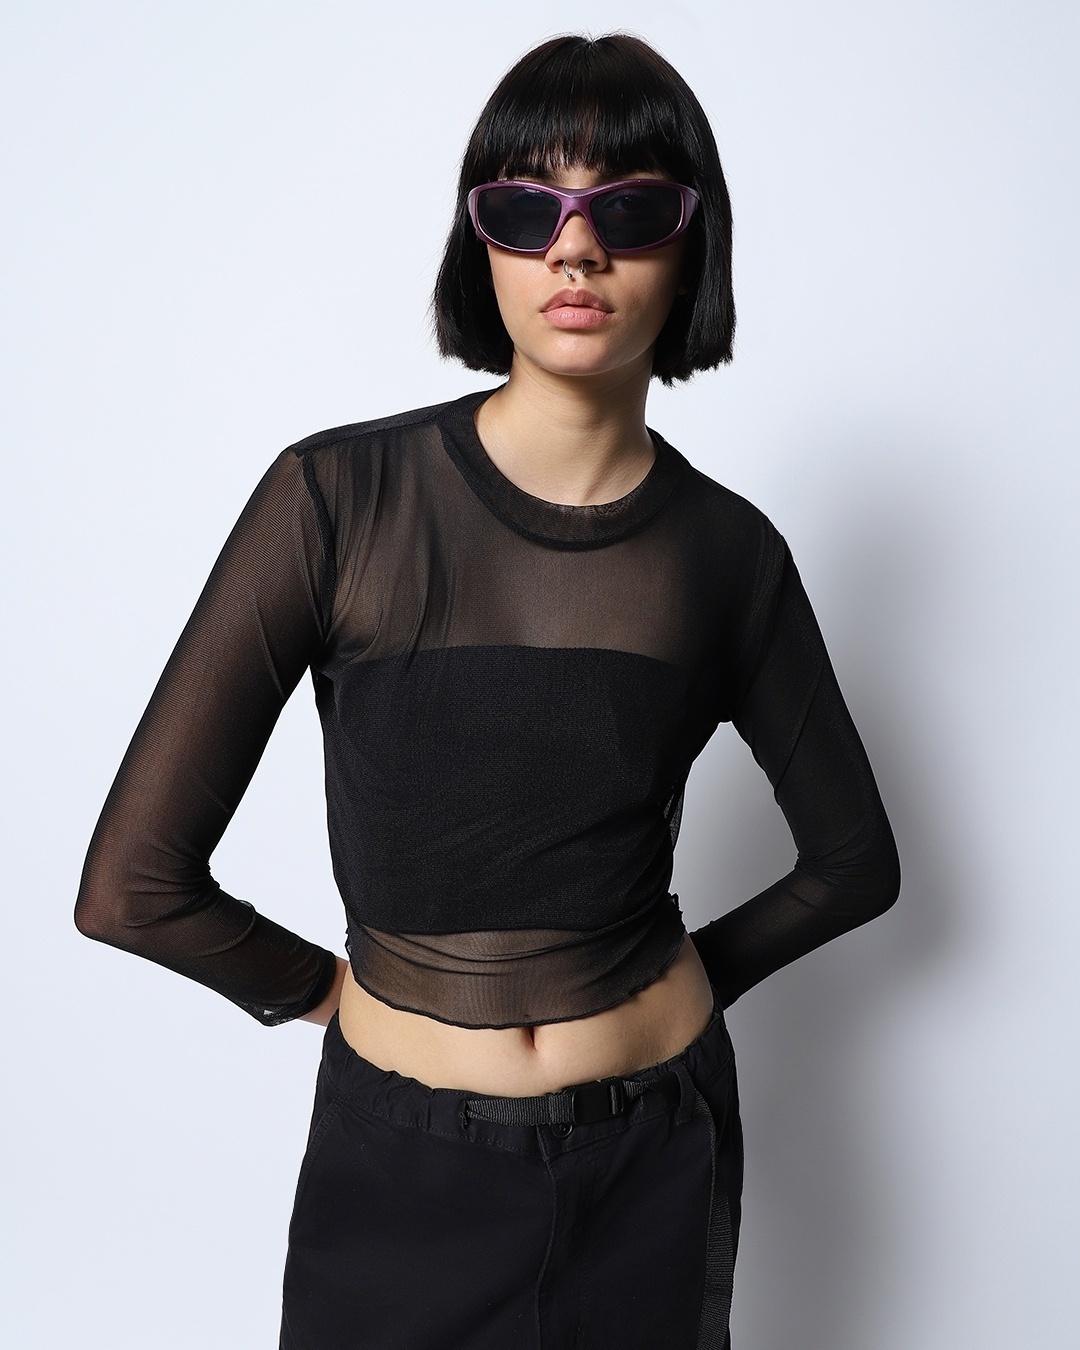 Buy Black Mesh Crop Top With Short Sleeves Sheer See Through Mesh Tops for  Women Online in India 